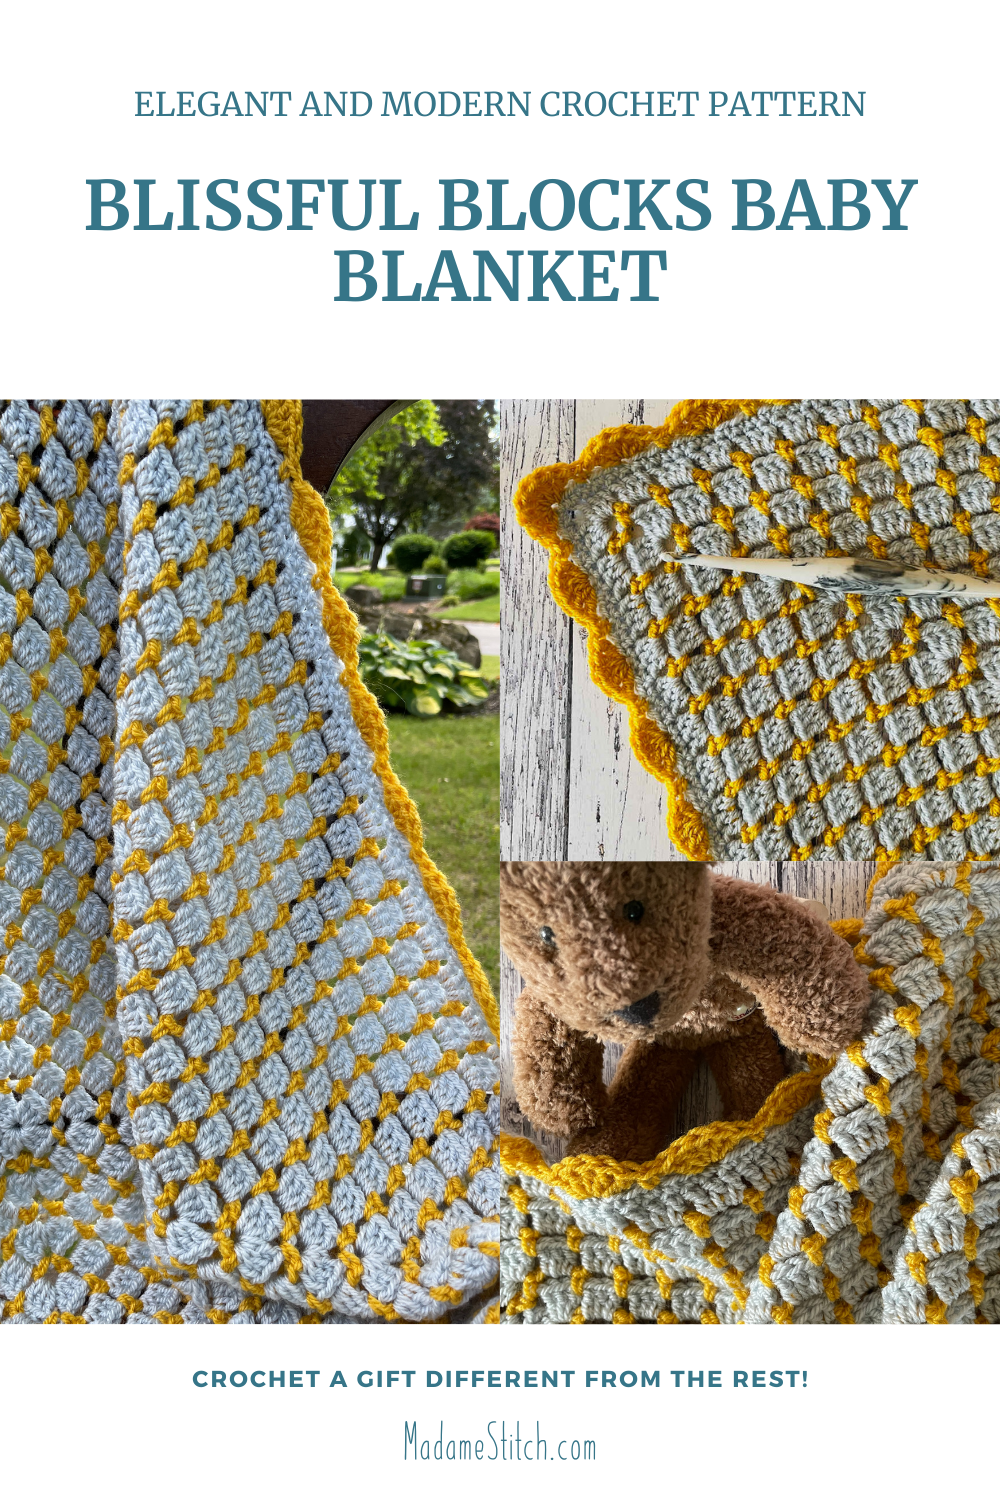 Pin to Pinterest - Blissful Blocks Baby Blanket crochet pattern by MadameStitch